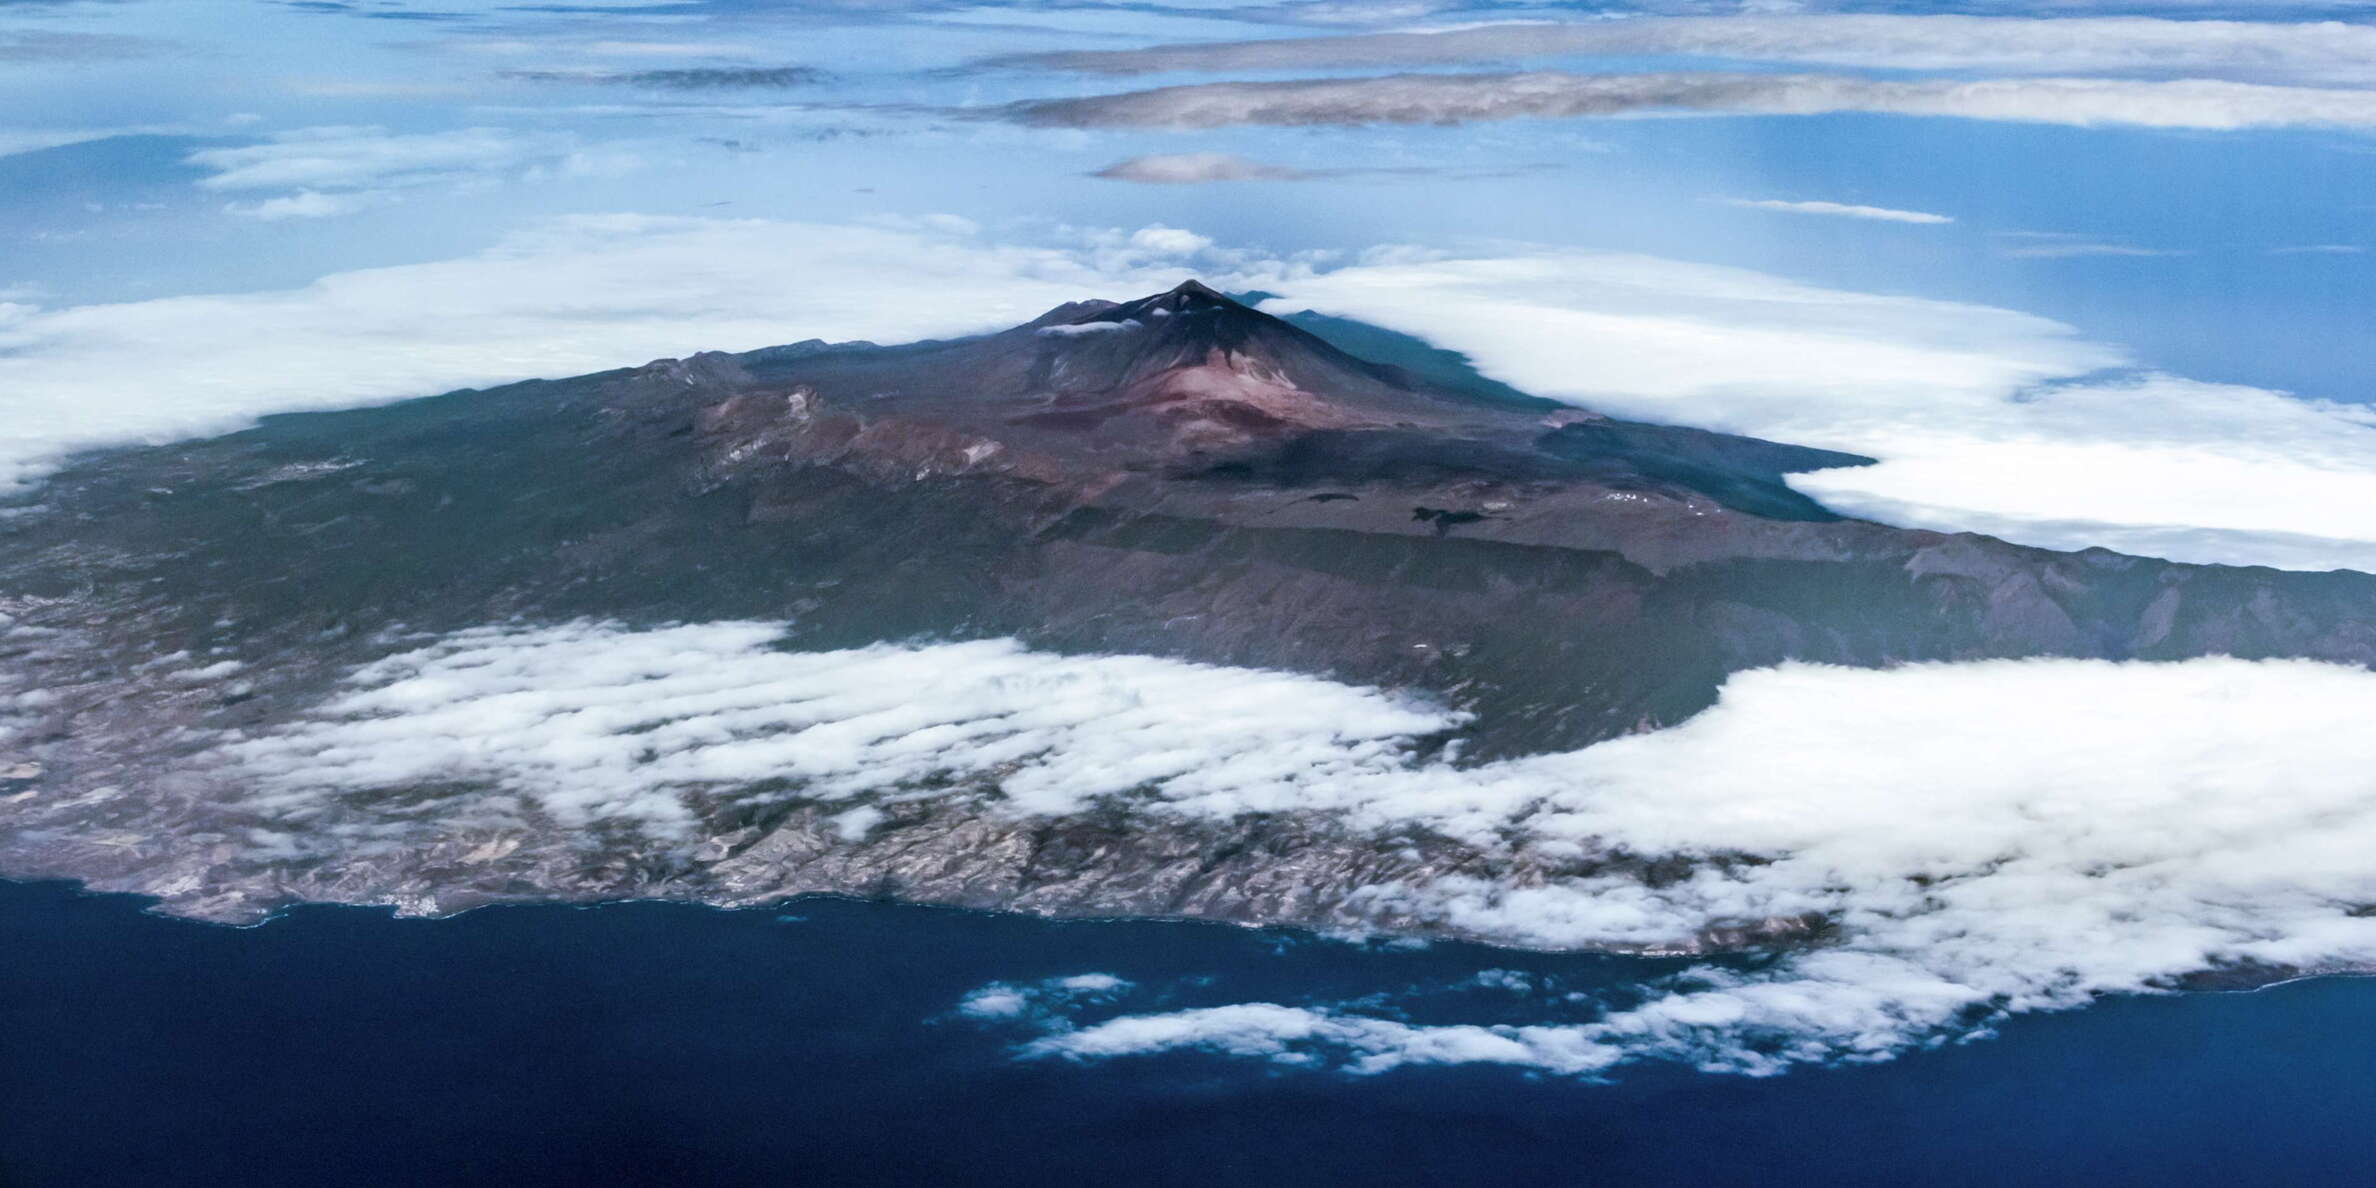 Tenerife with Pico del Teide